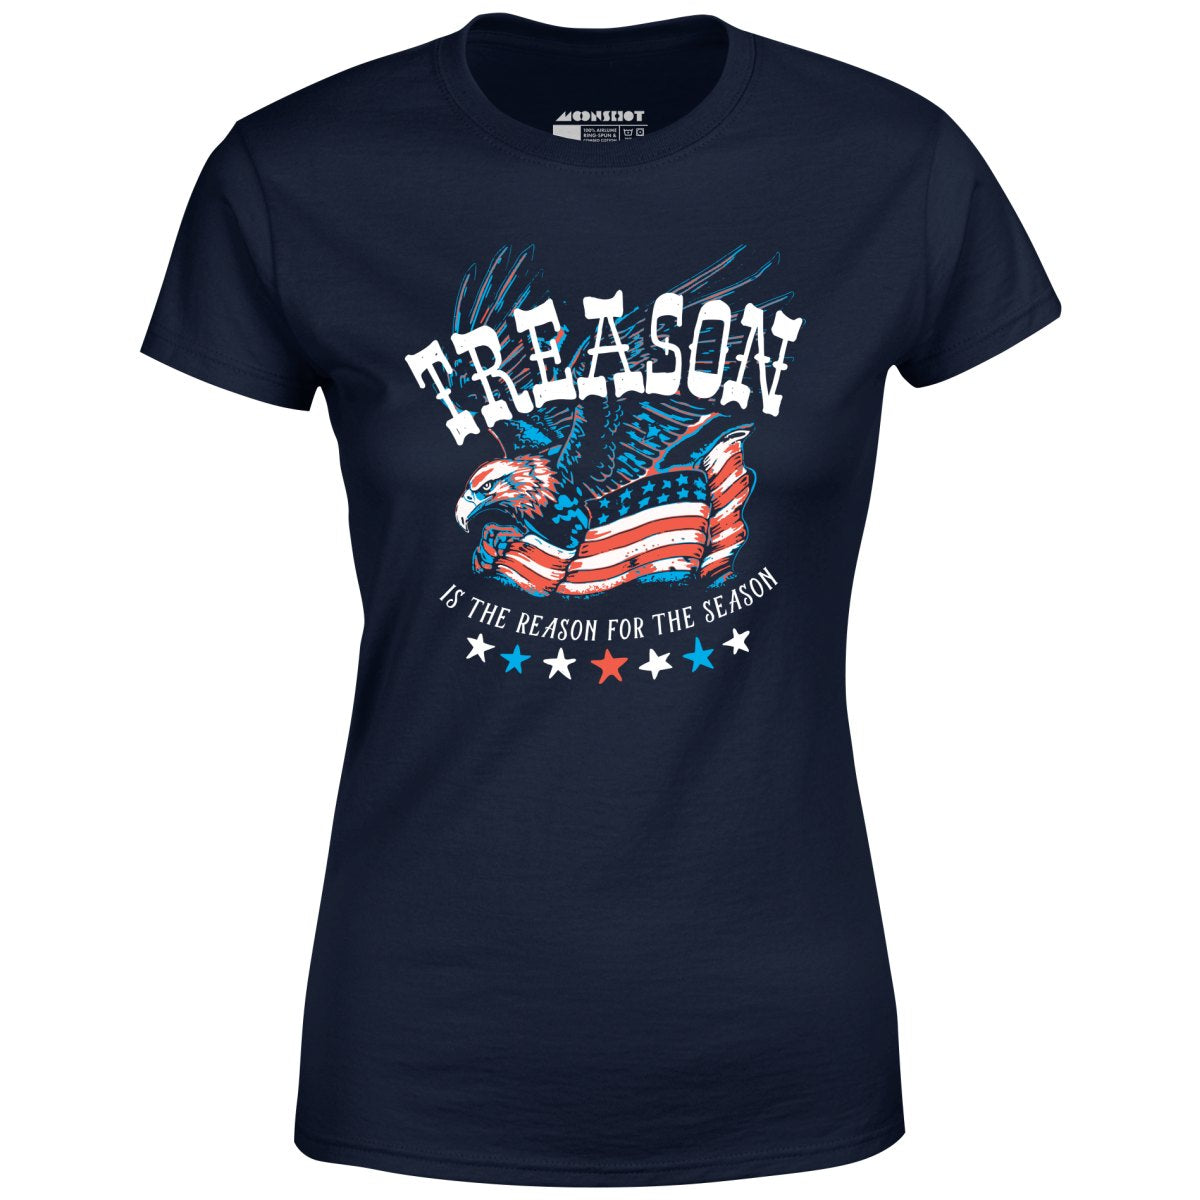 Treason is the Reason for the Season - Women's T-Shirt